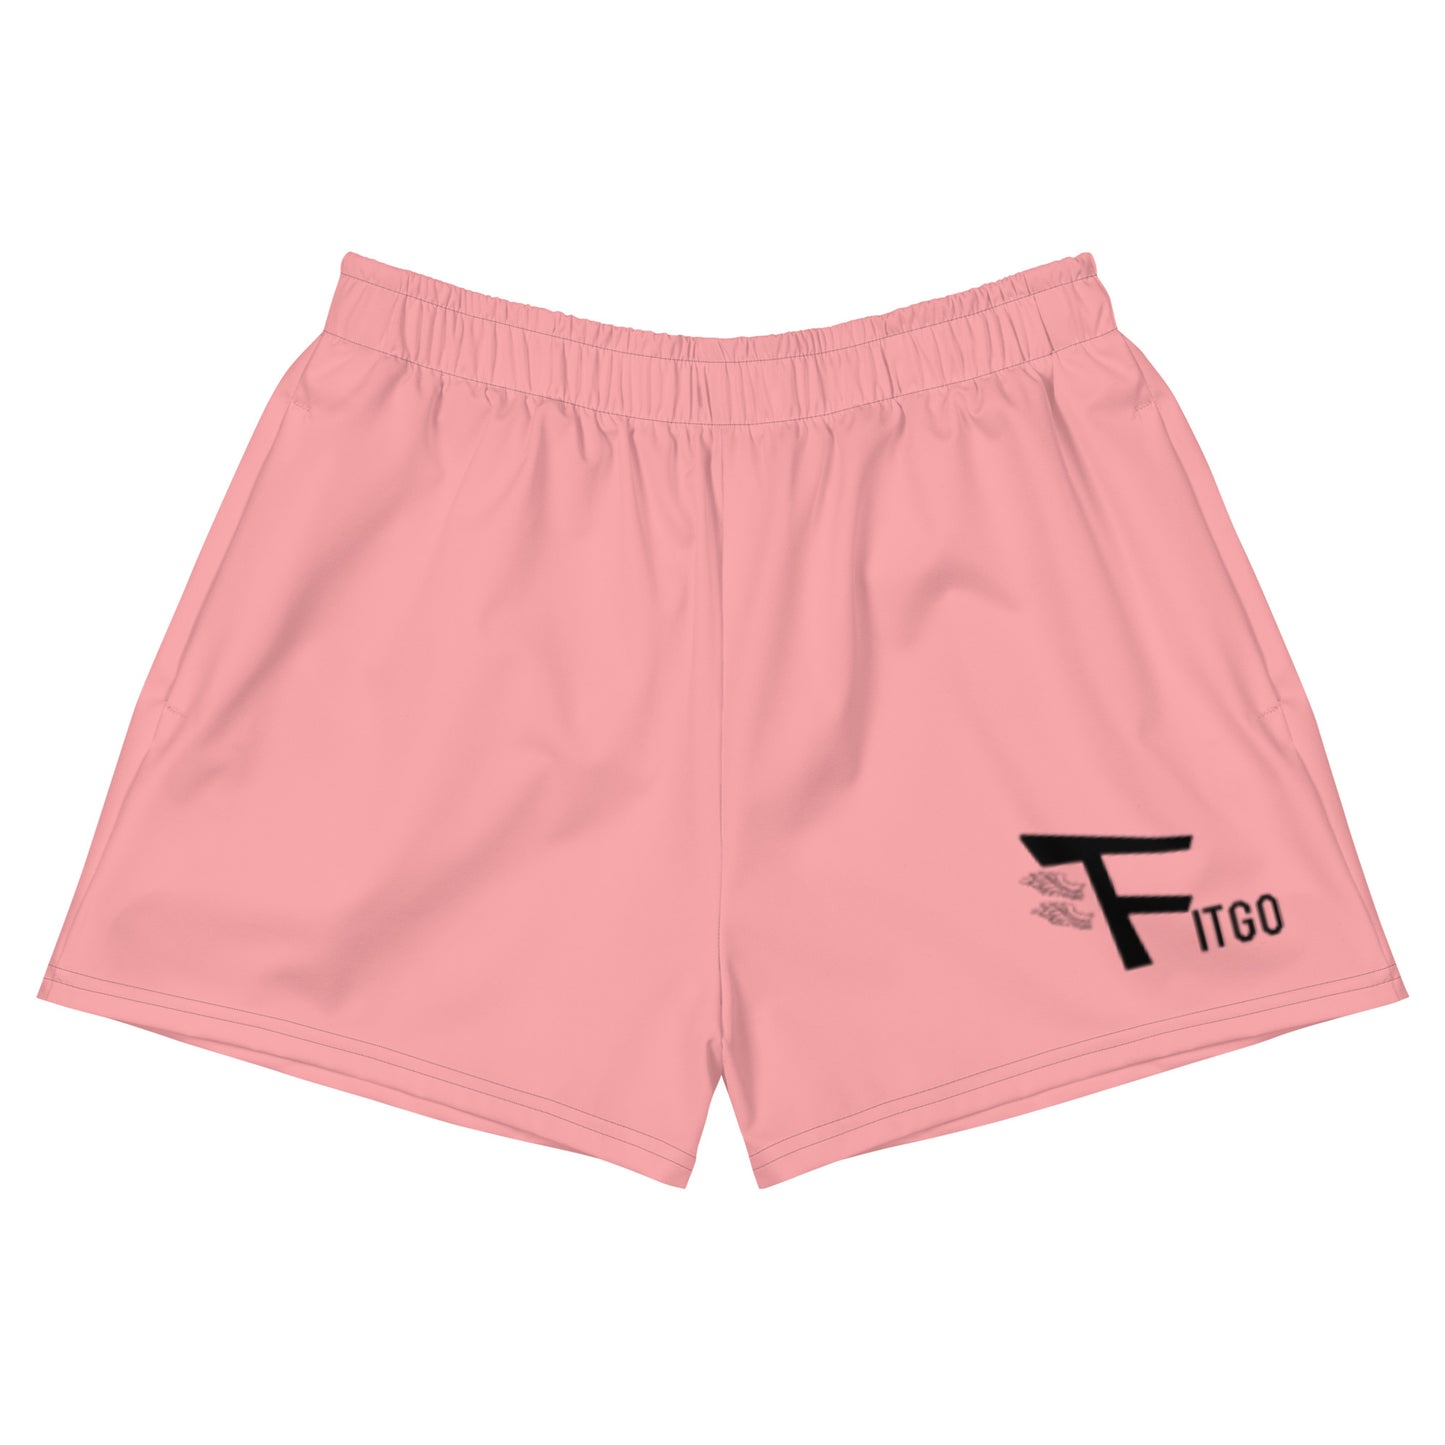 Women's Fitgo Shorts